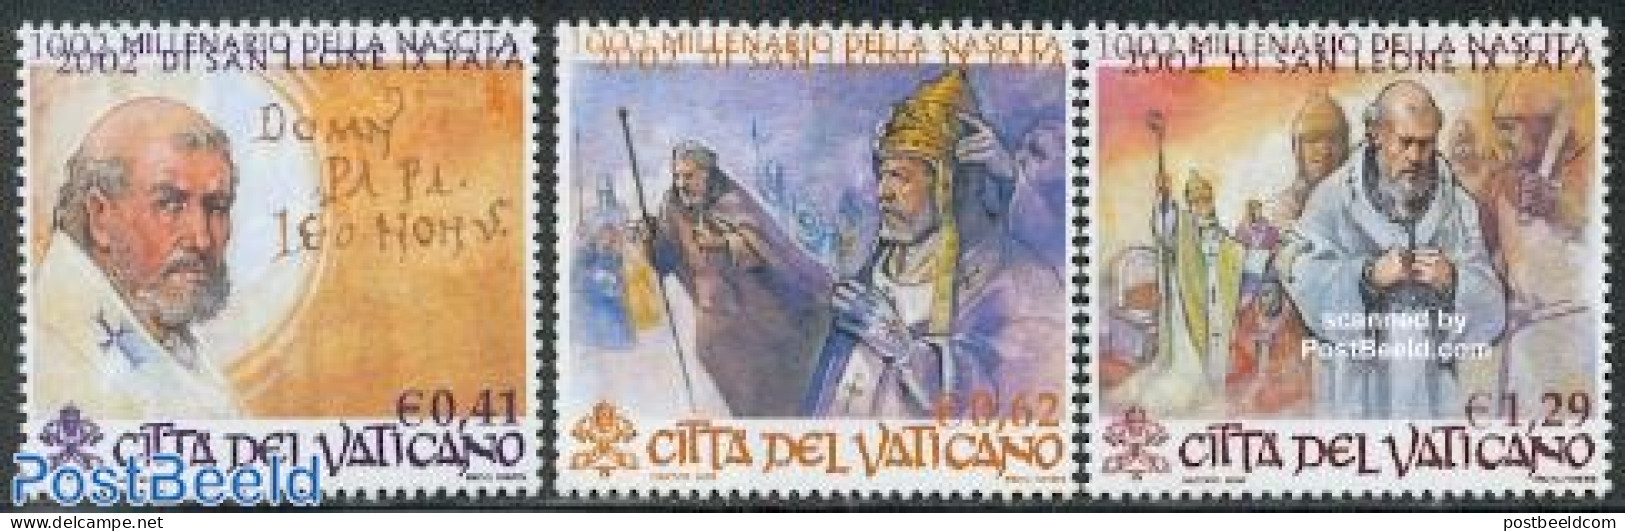 Vatican 2002 Pope S. Leone IX 3v (1v With Tab), Mint NH, Religion - Pope - Religion - Ongebruikt